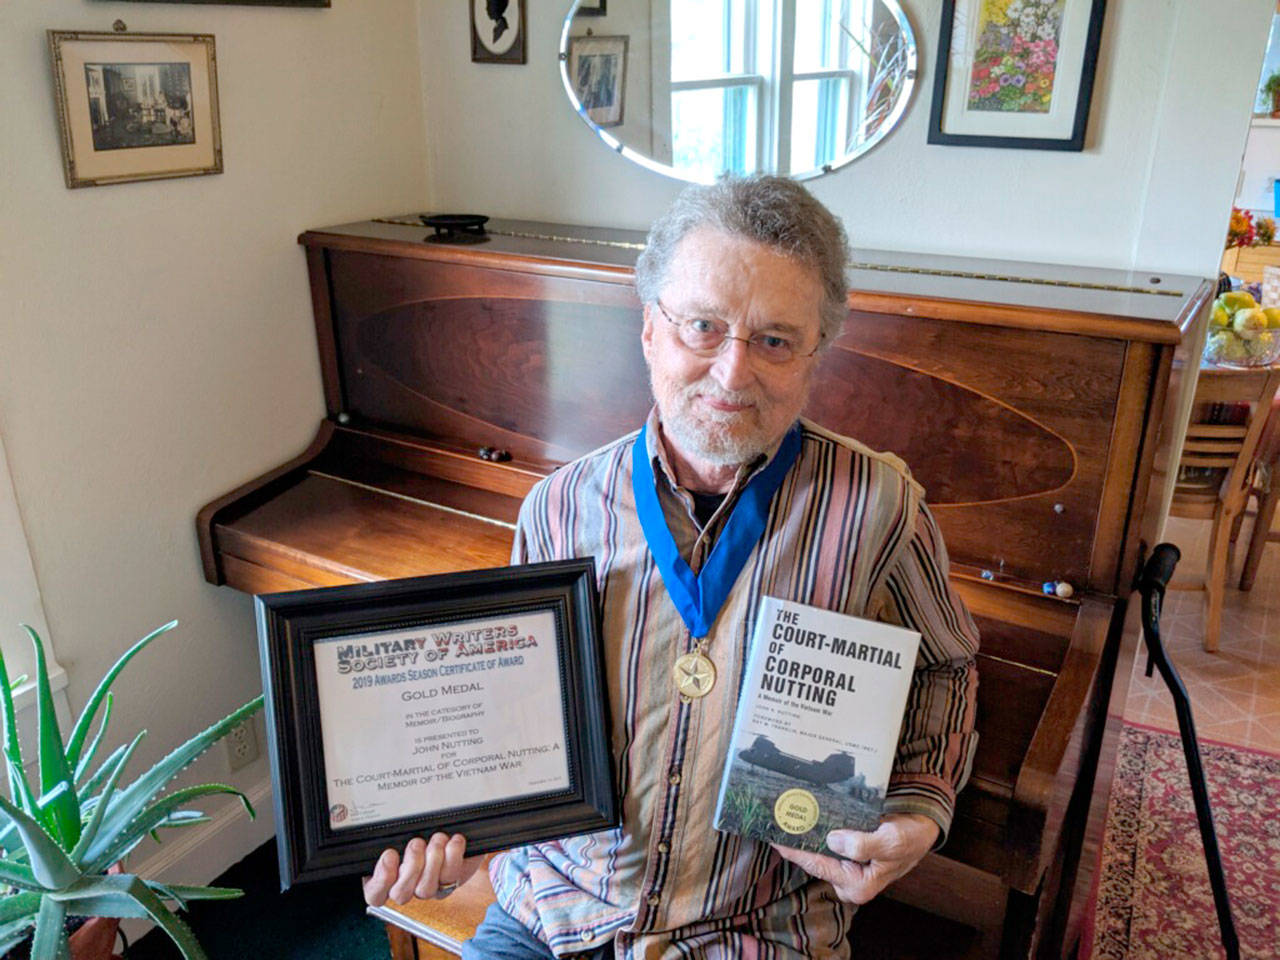 John Nutting displays his award and his memoir in his Port Angeles residence.